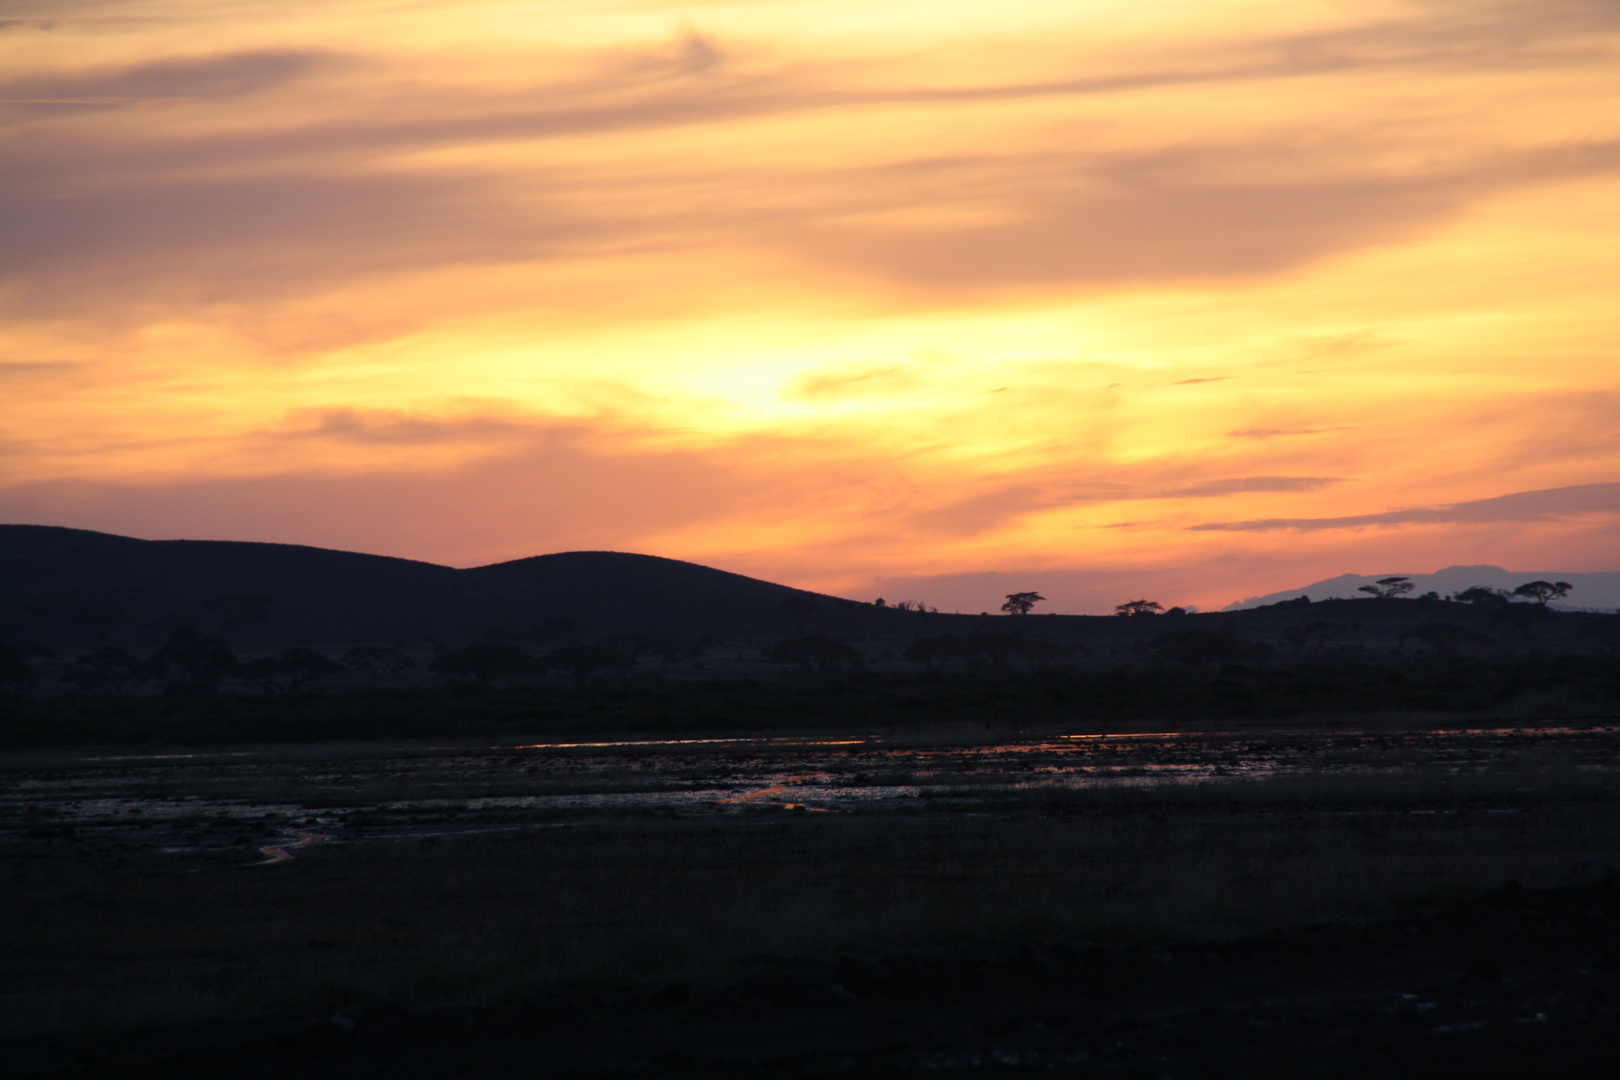 Sonnenuntergang in Kenia - Ambosli Park